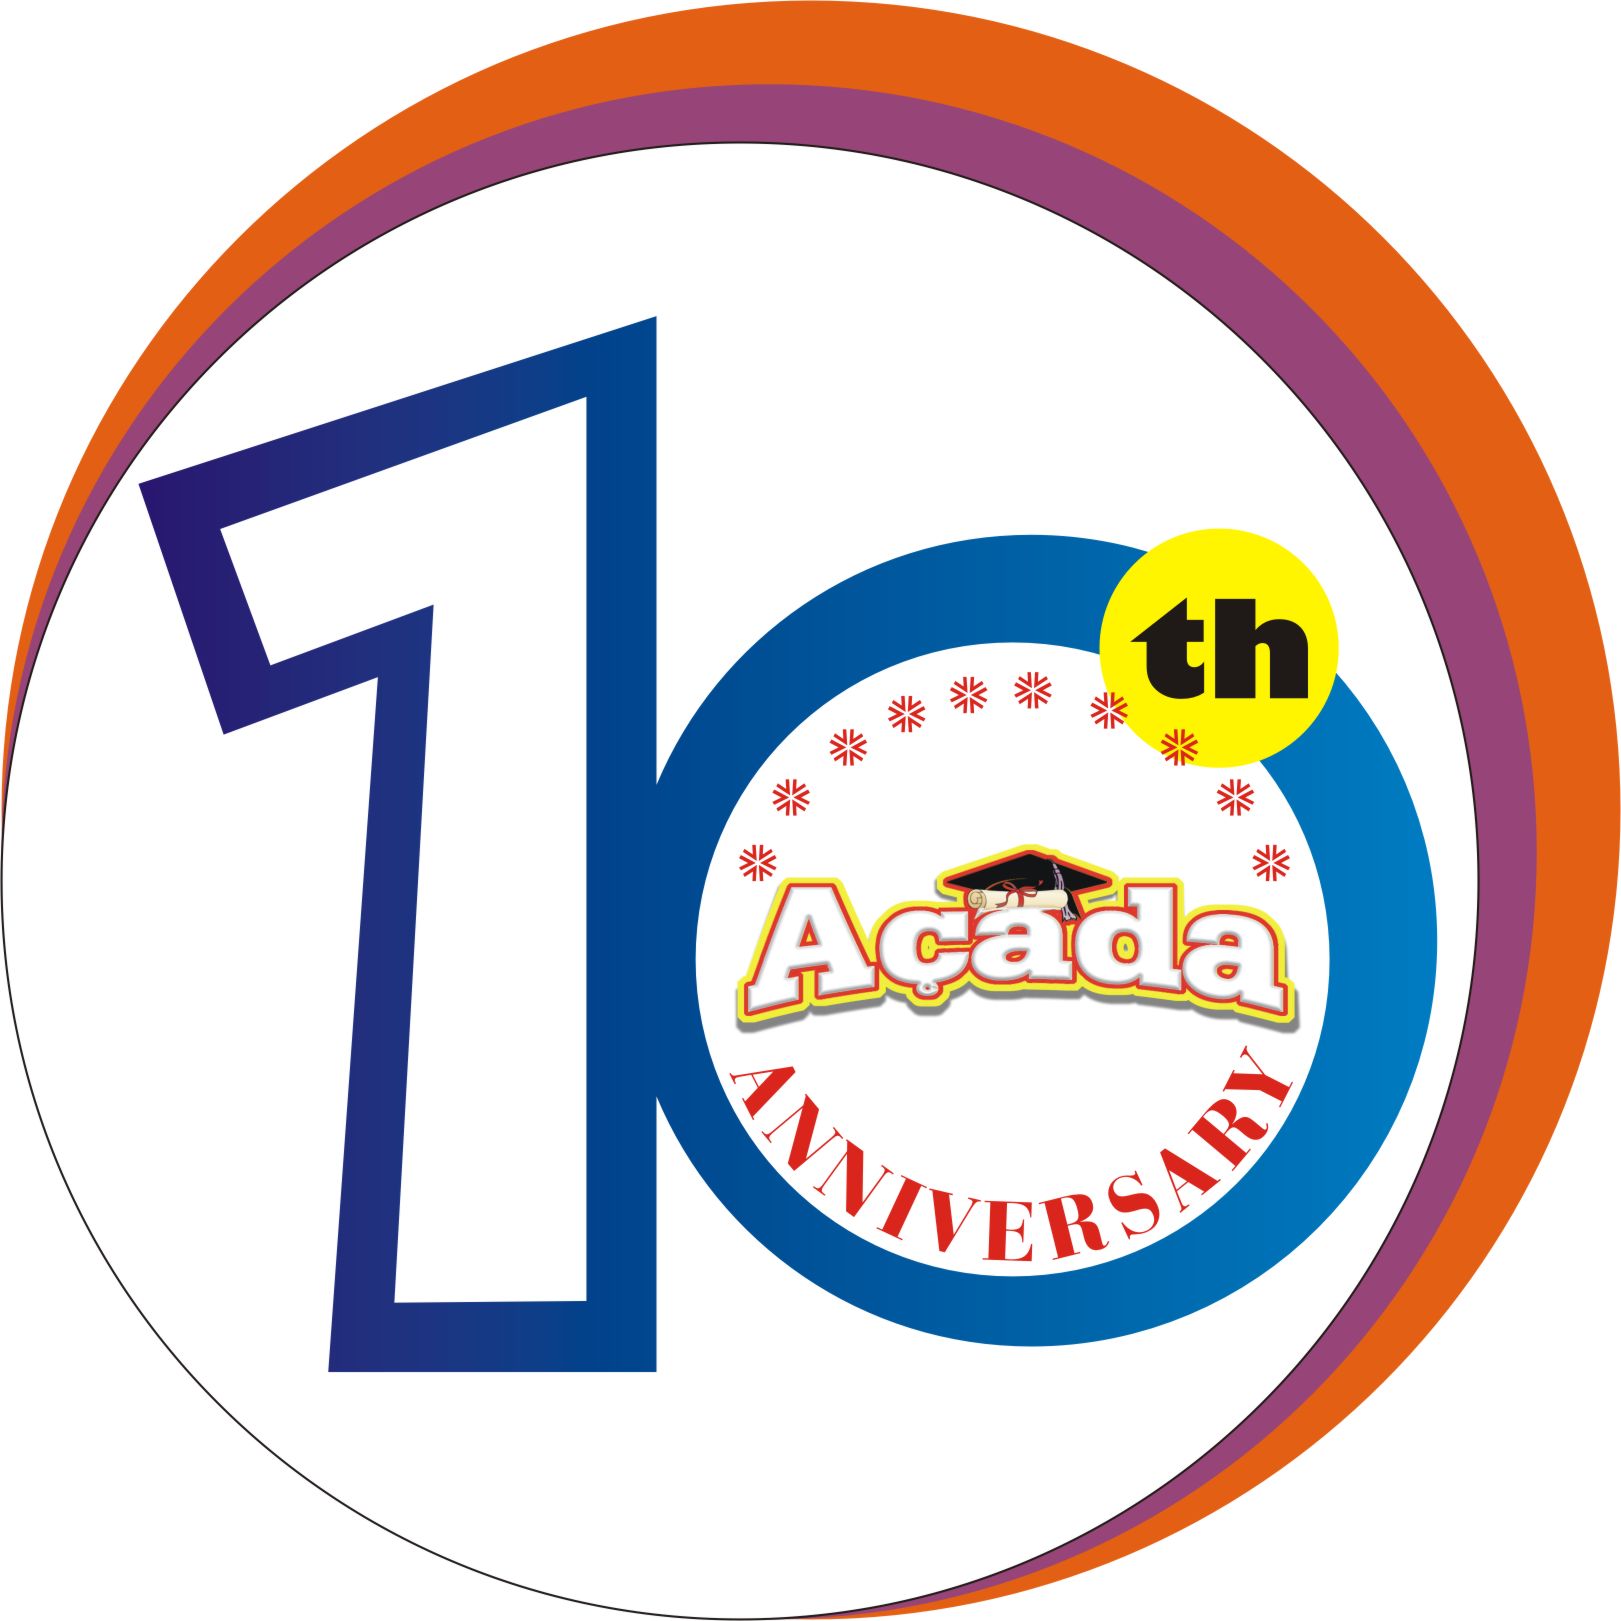 Acada Magazine Celebrates 10th Anniversary      